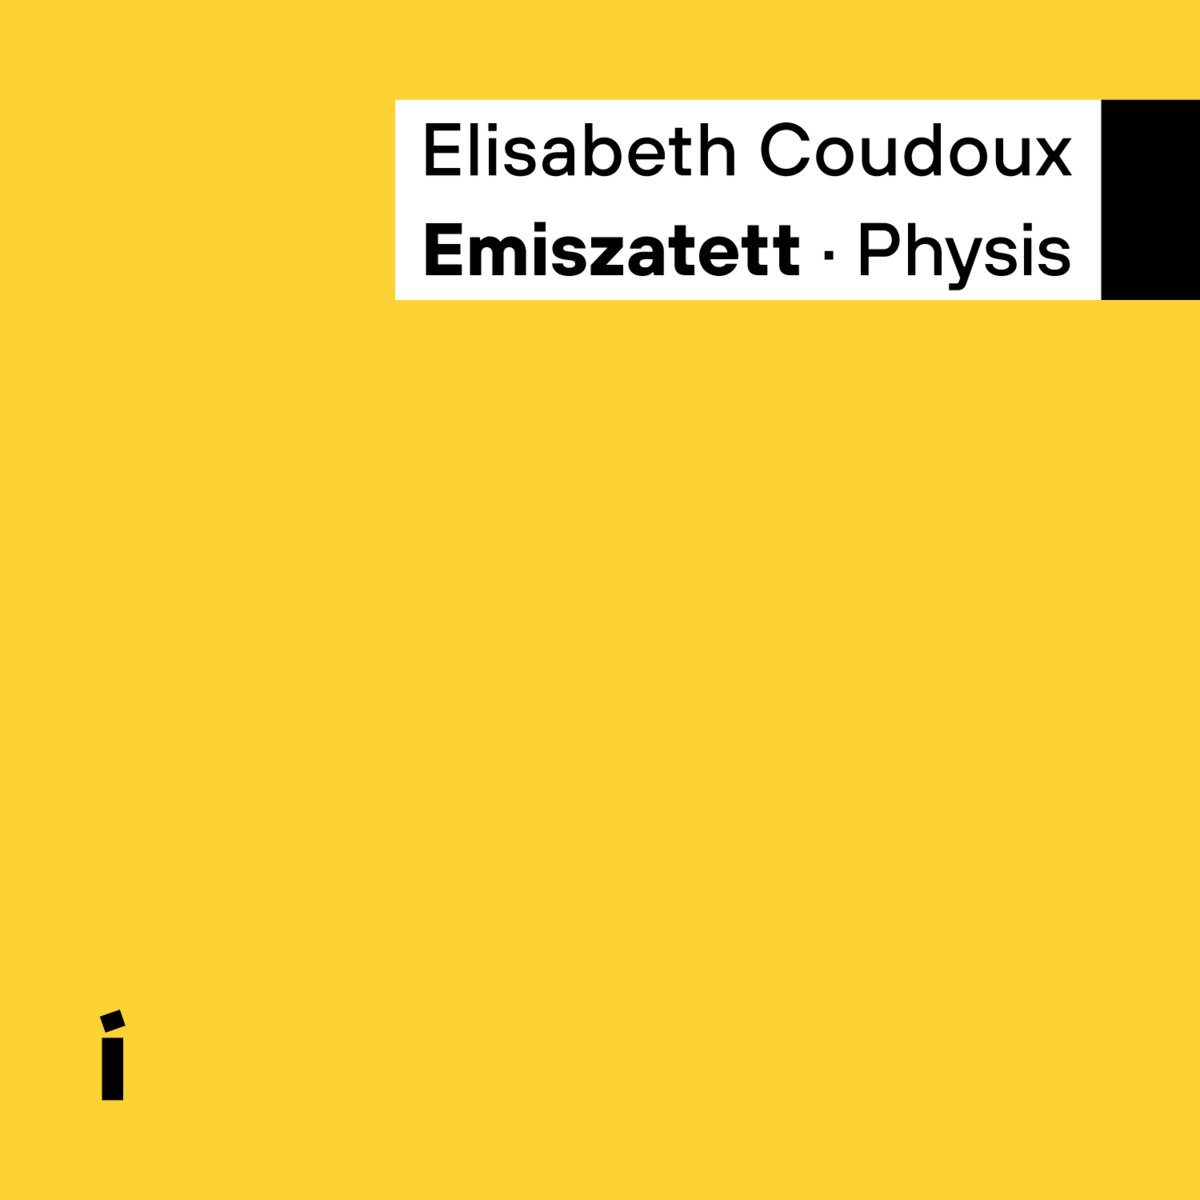 Elisabeth Coudoux Emiszatett Physis Matthias Muche Robert Landfermann Philip Zoubek Etienne Nillesen LOFT Cologne Köln recorded Christian Heck